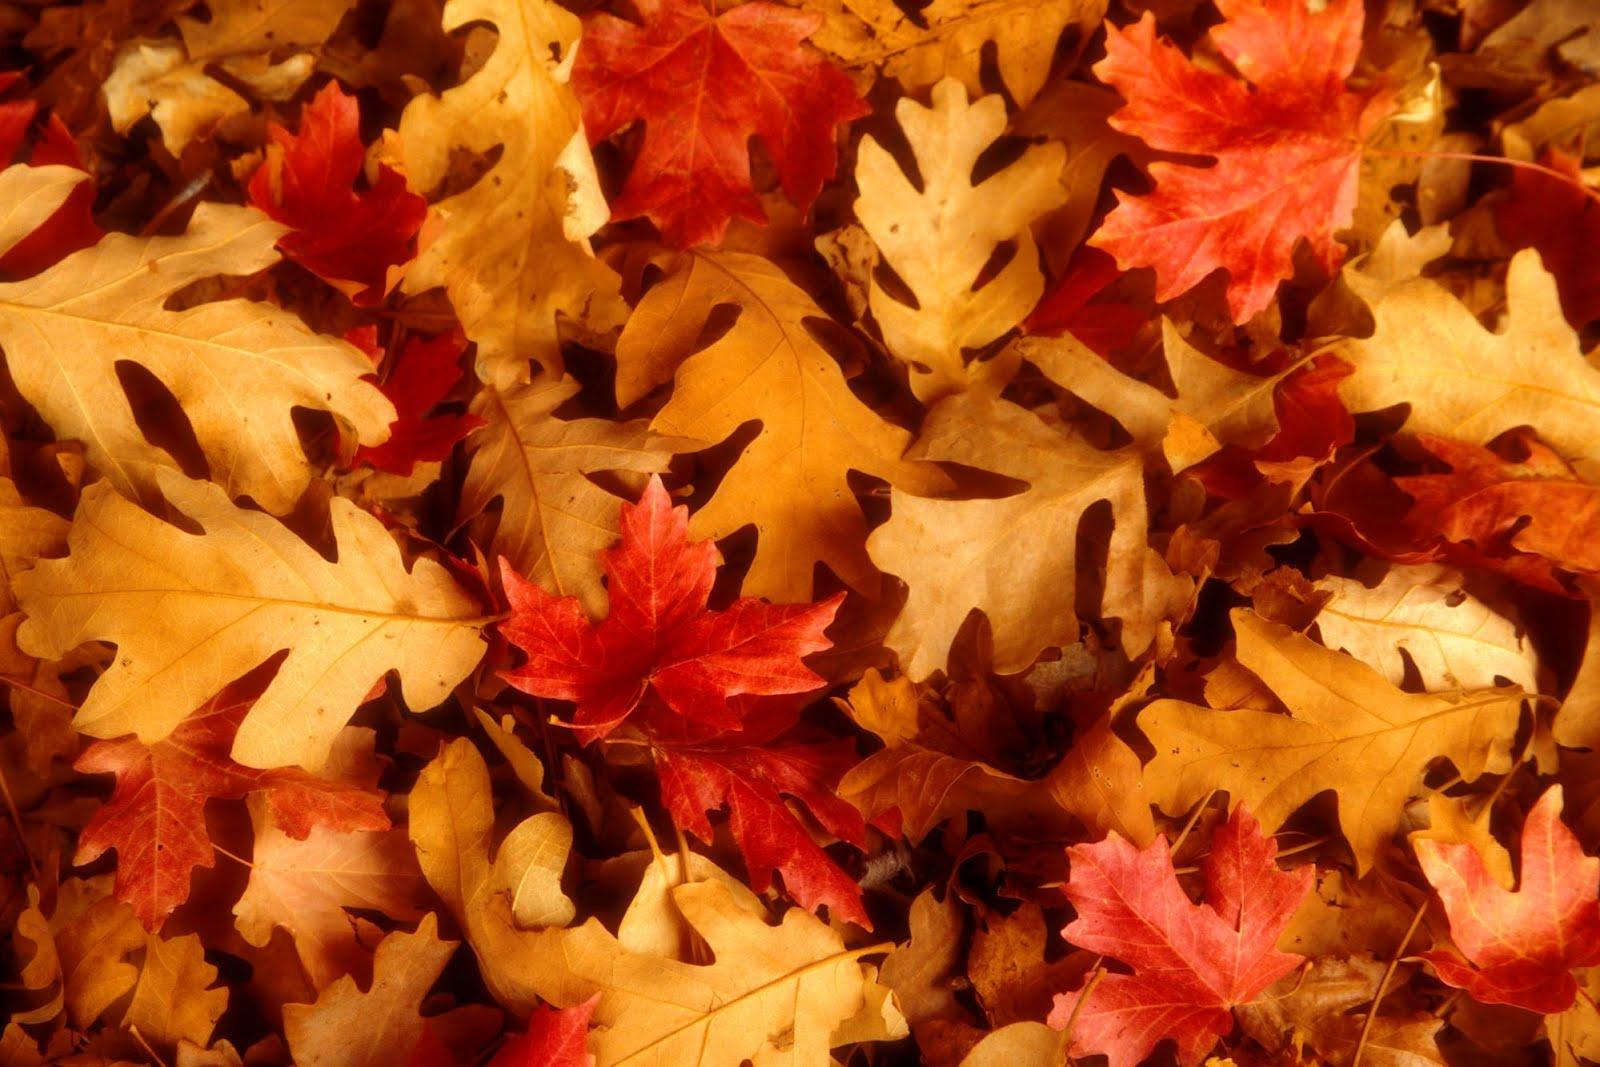 Beautiful Fall Scenery Wallpaper and Background